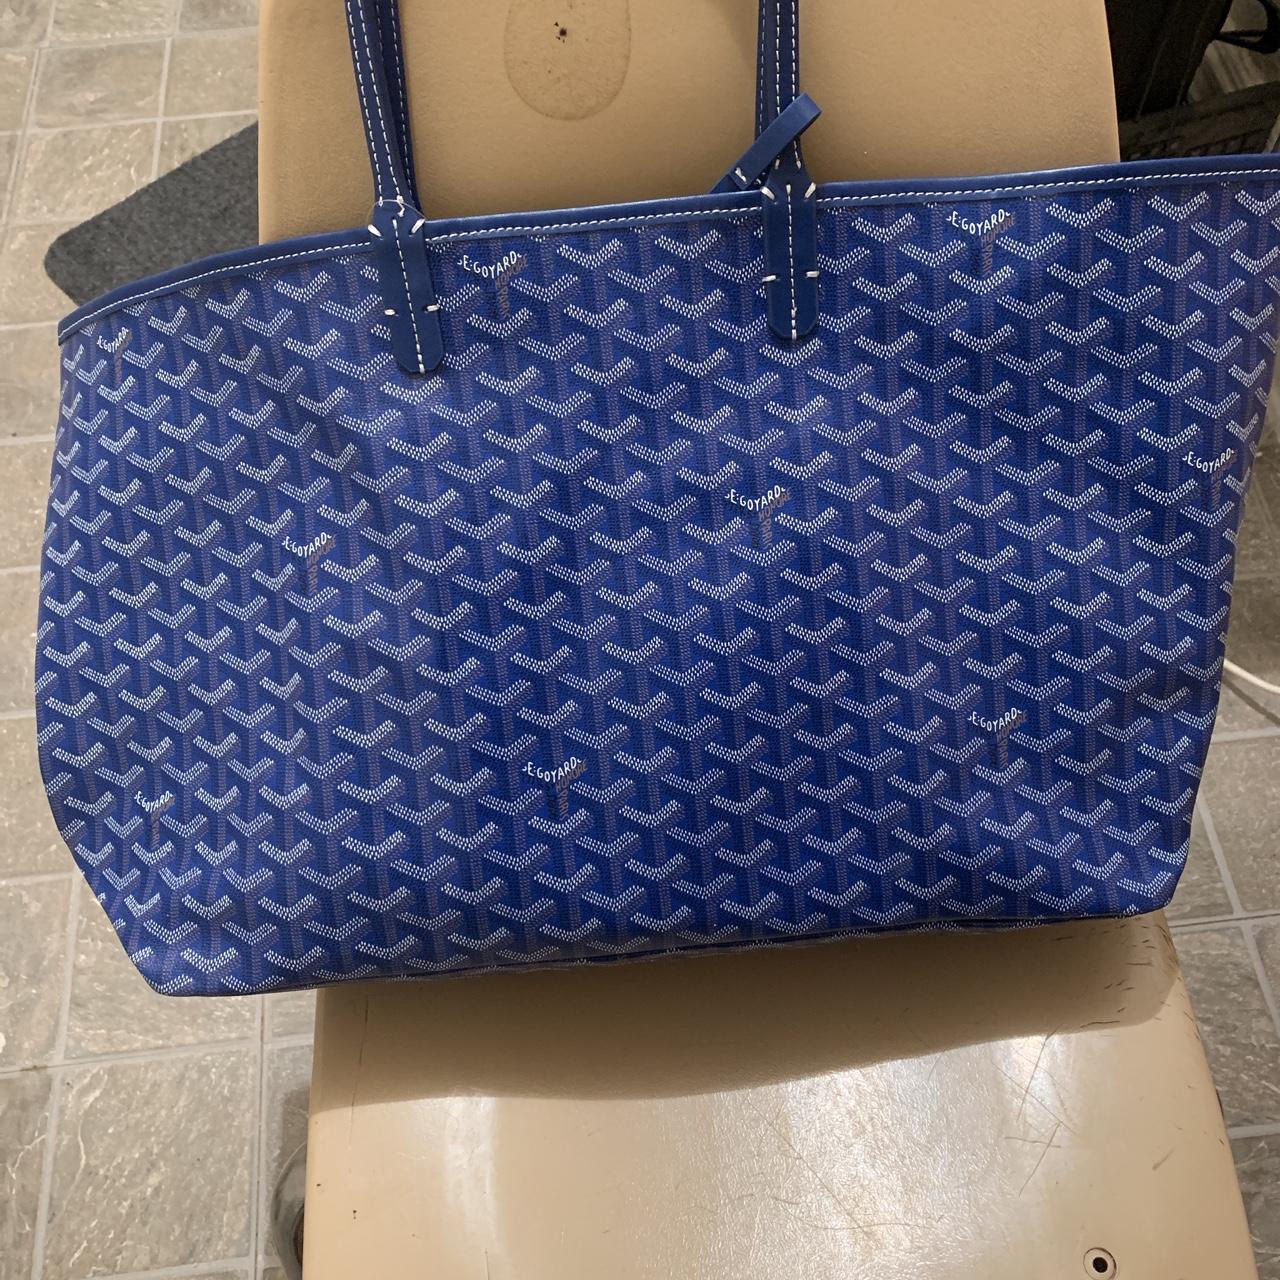 Nipsey Blue Maison Goyard Bag for sale. Brand New.